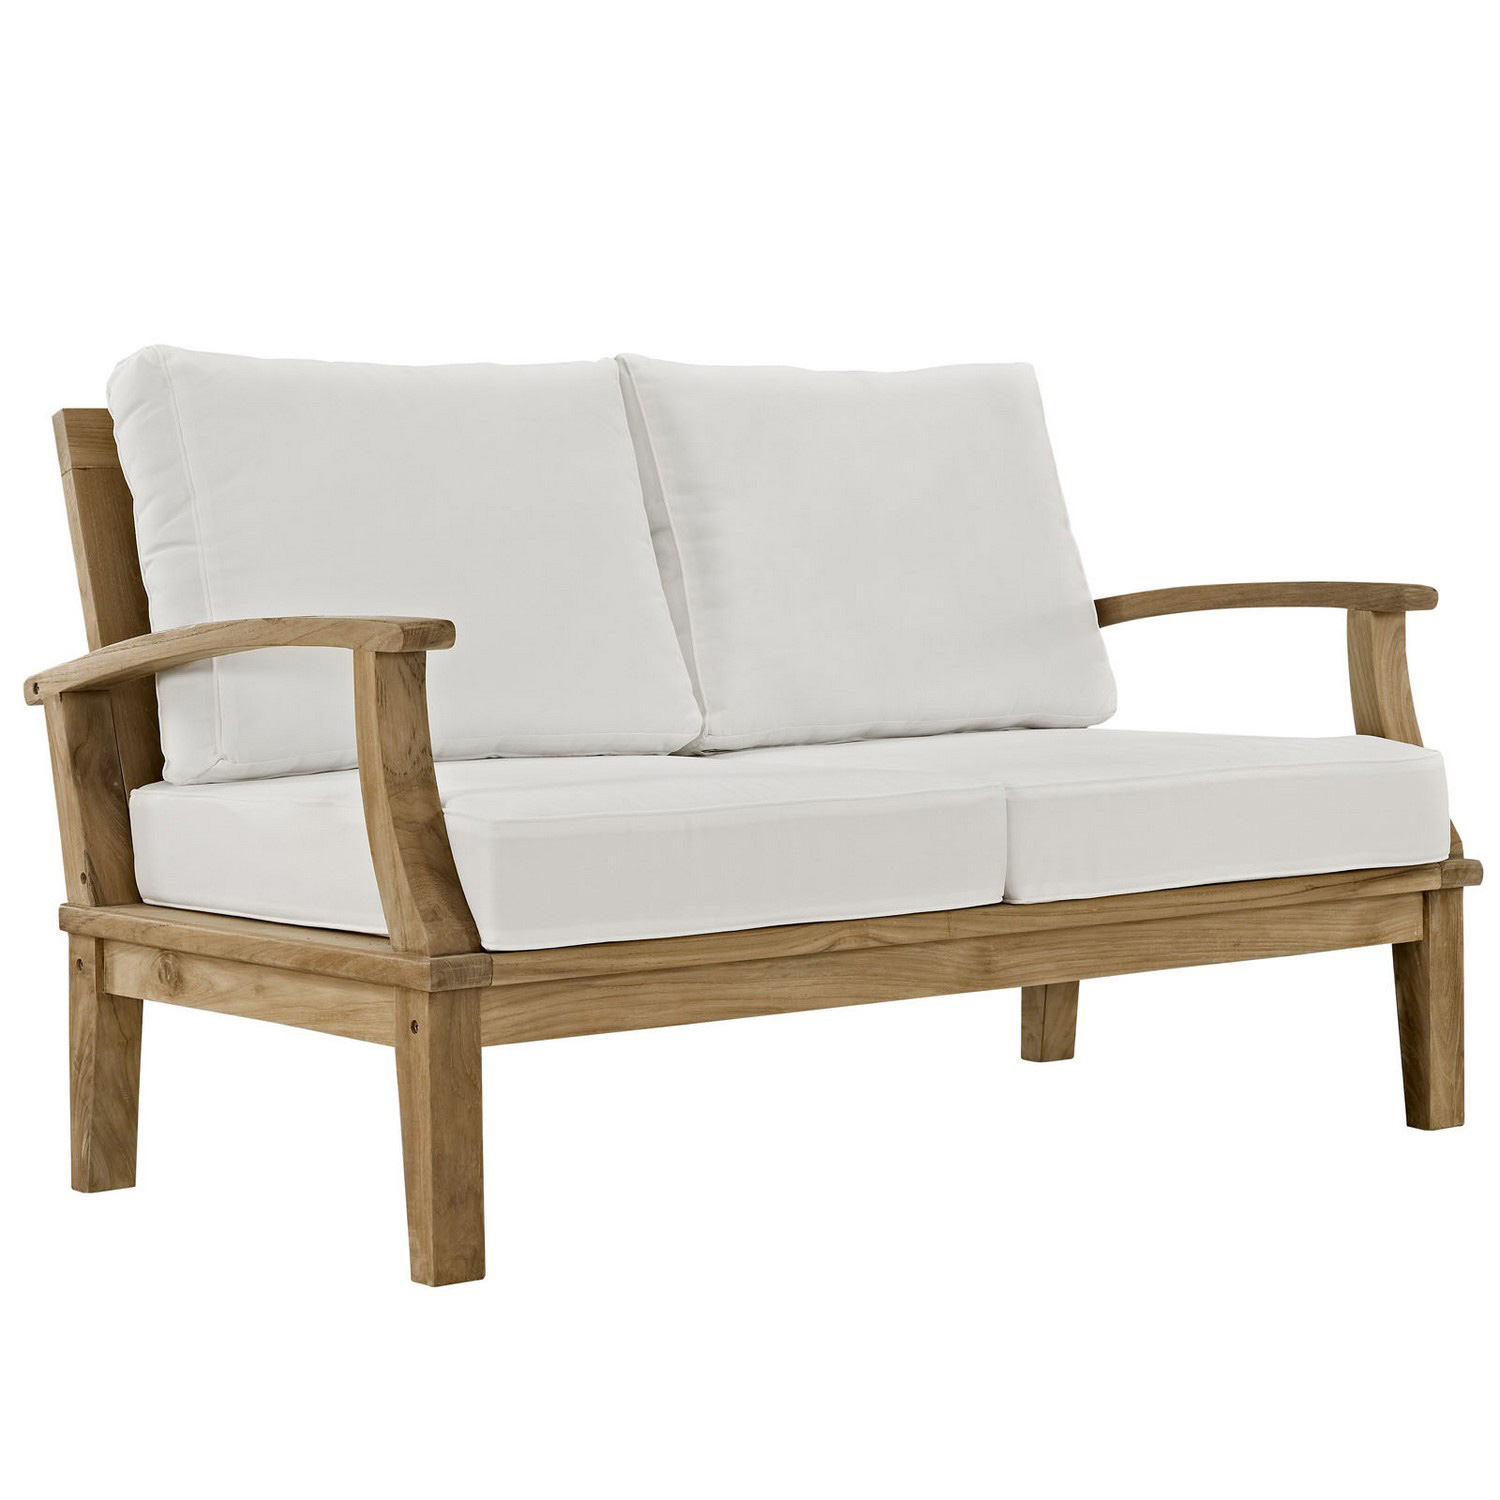 Modway Marina 3 Piece Outdoor Patio Teak Sofa Set - Natural White